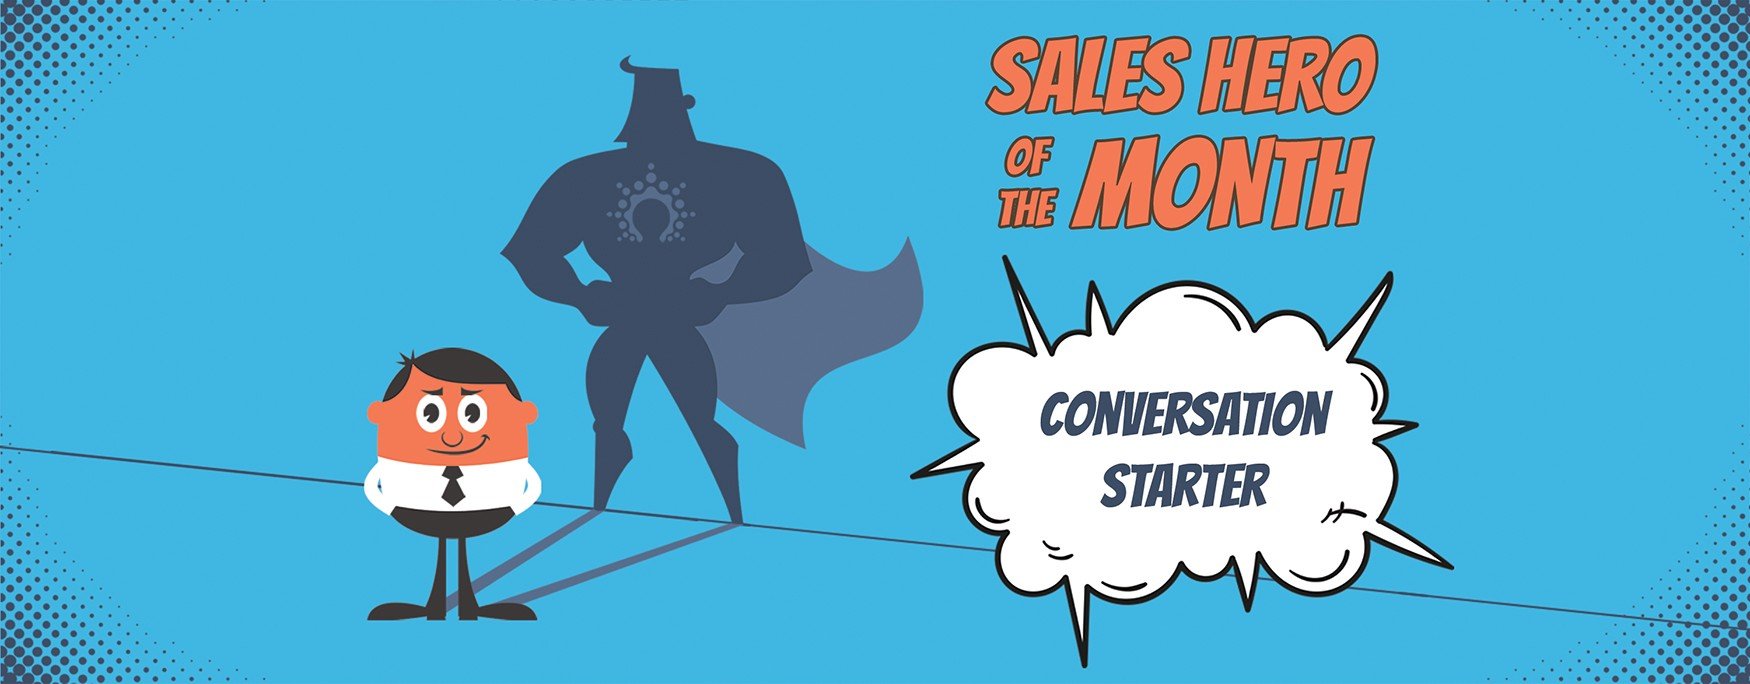 Sales hero of the month - Conversation Starter